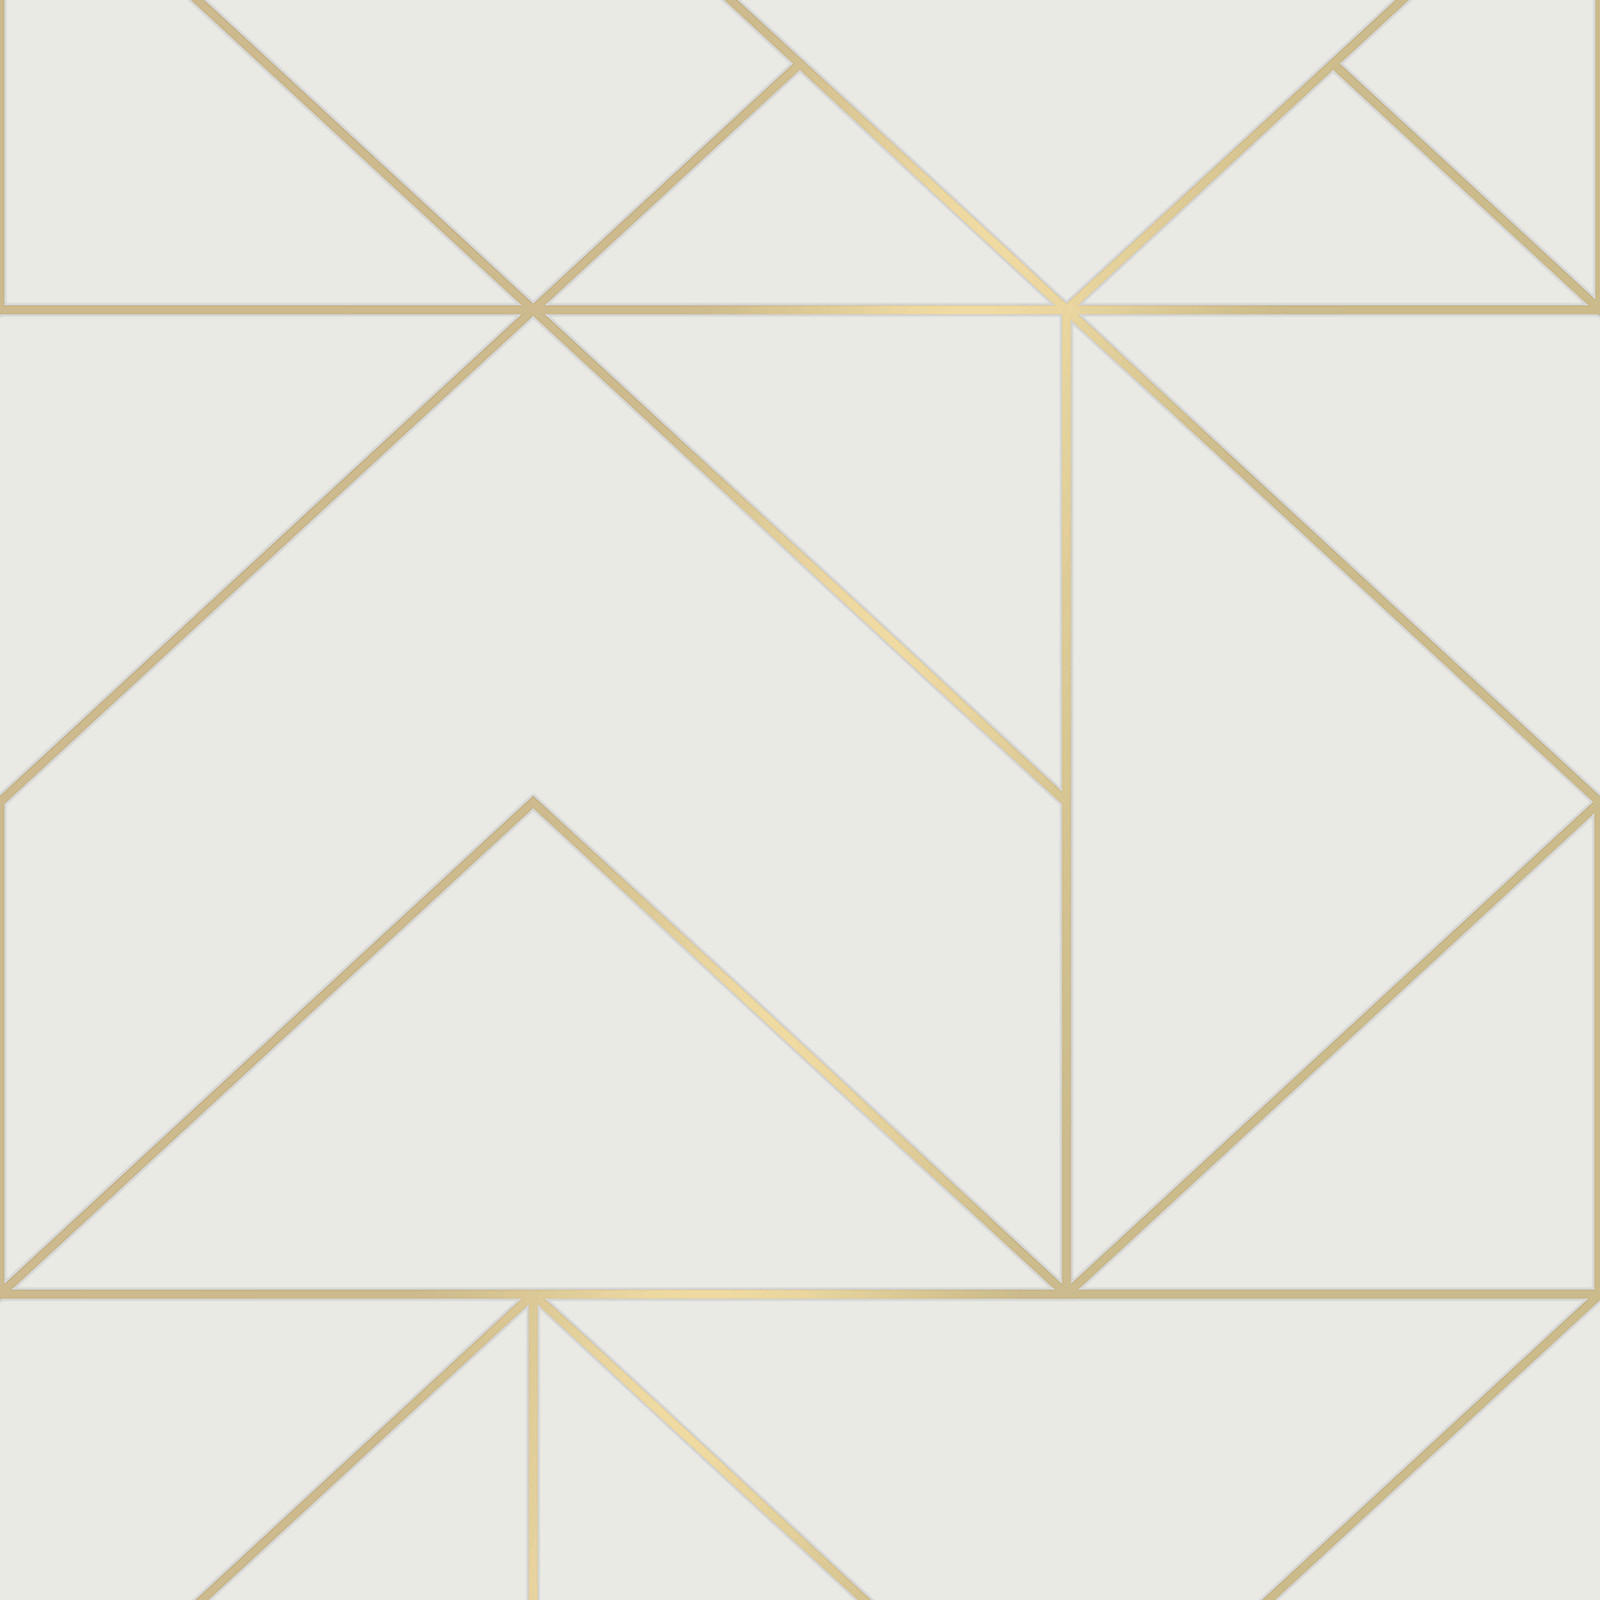 VLIESTAPETE  - Goldfarben/Weiß, Basics, Papier/Kunststoff (52/1005cm)